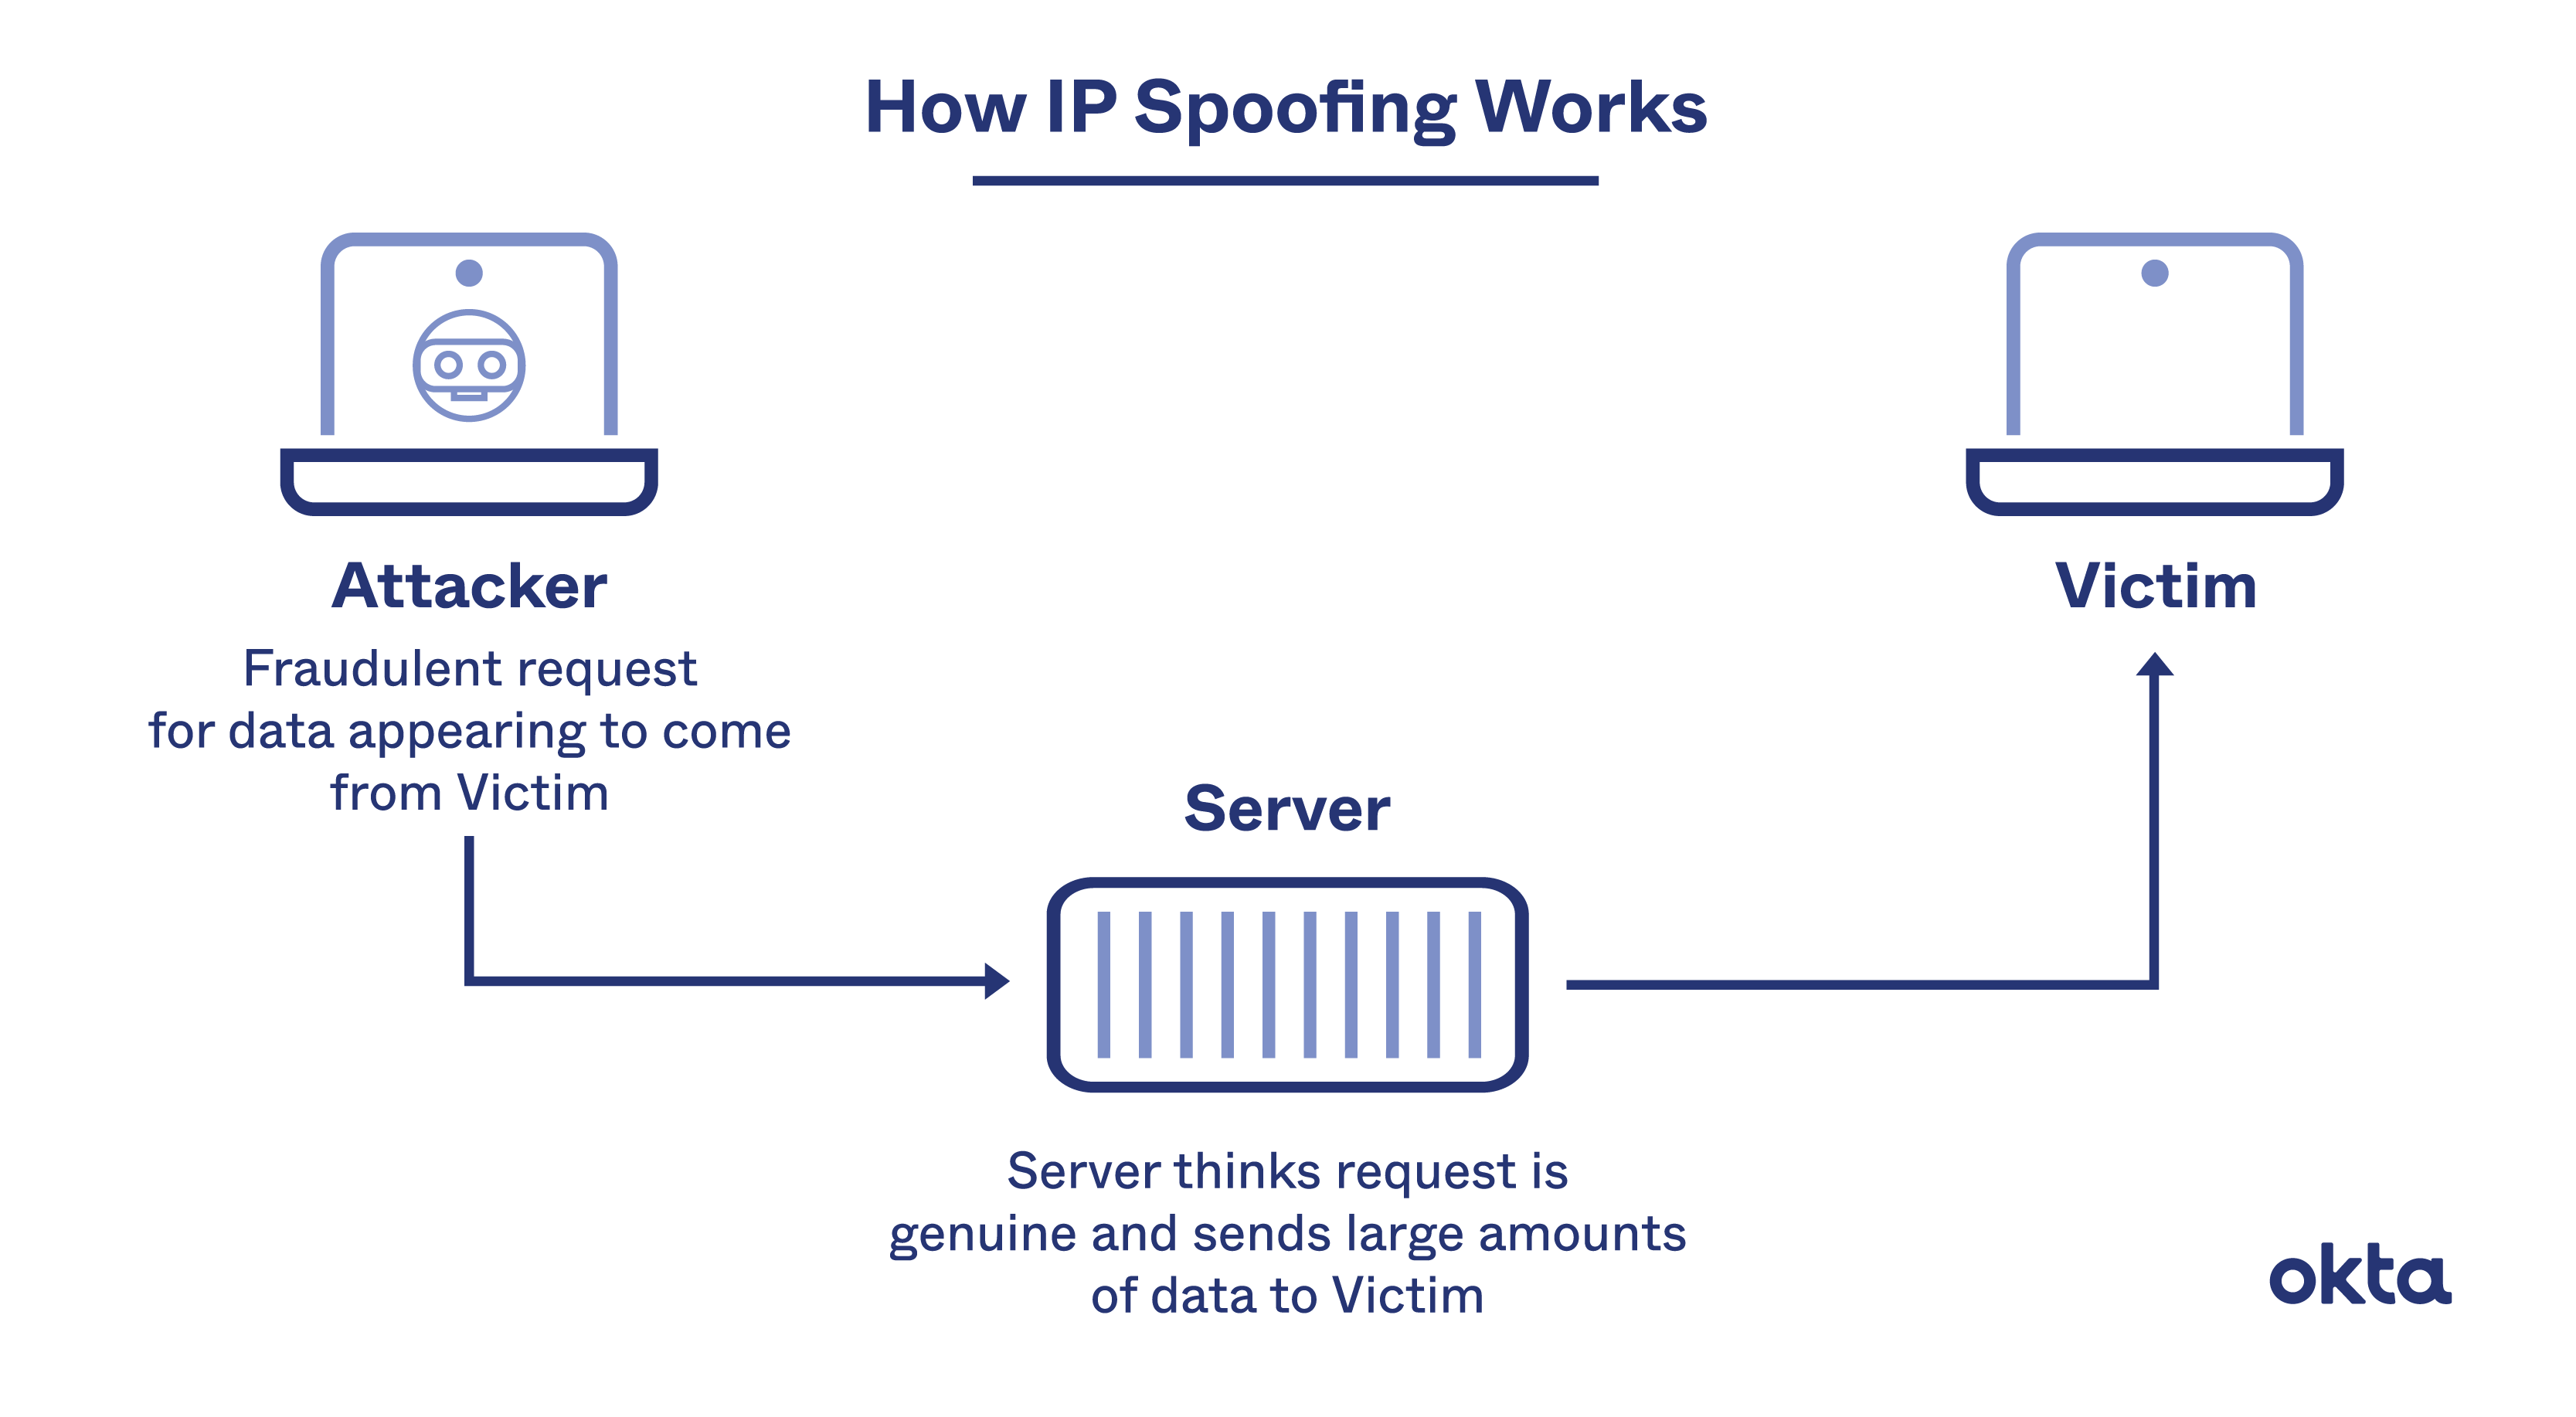 IP Spoofing